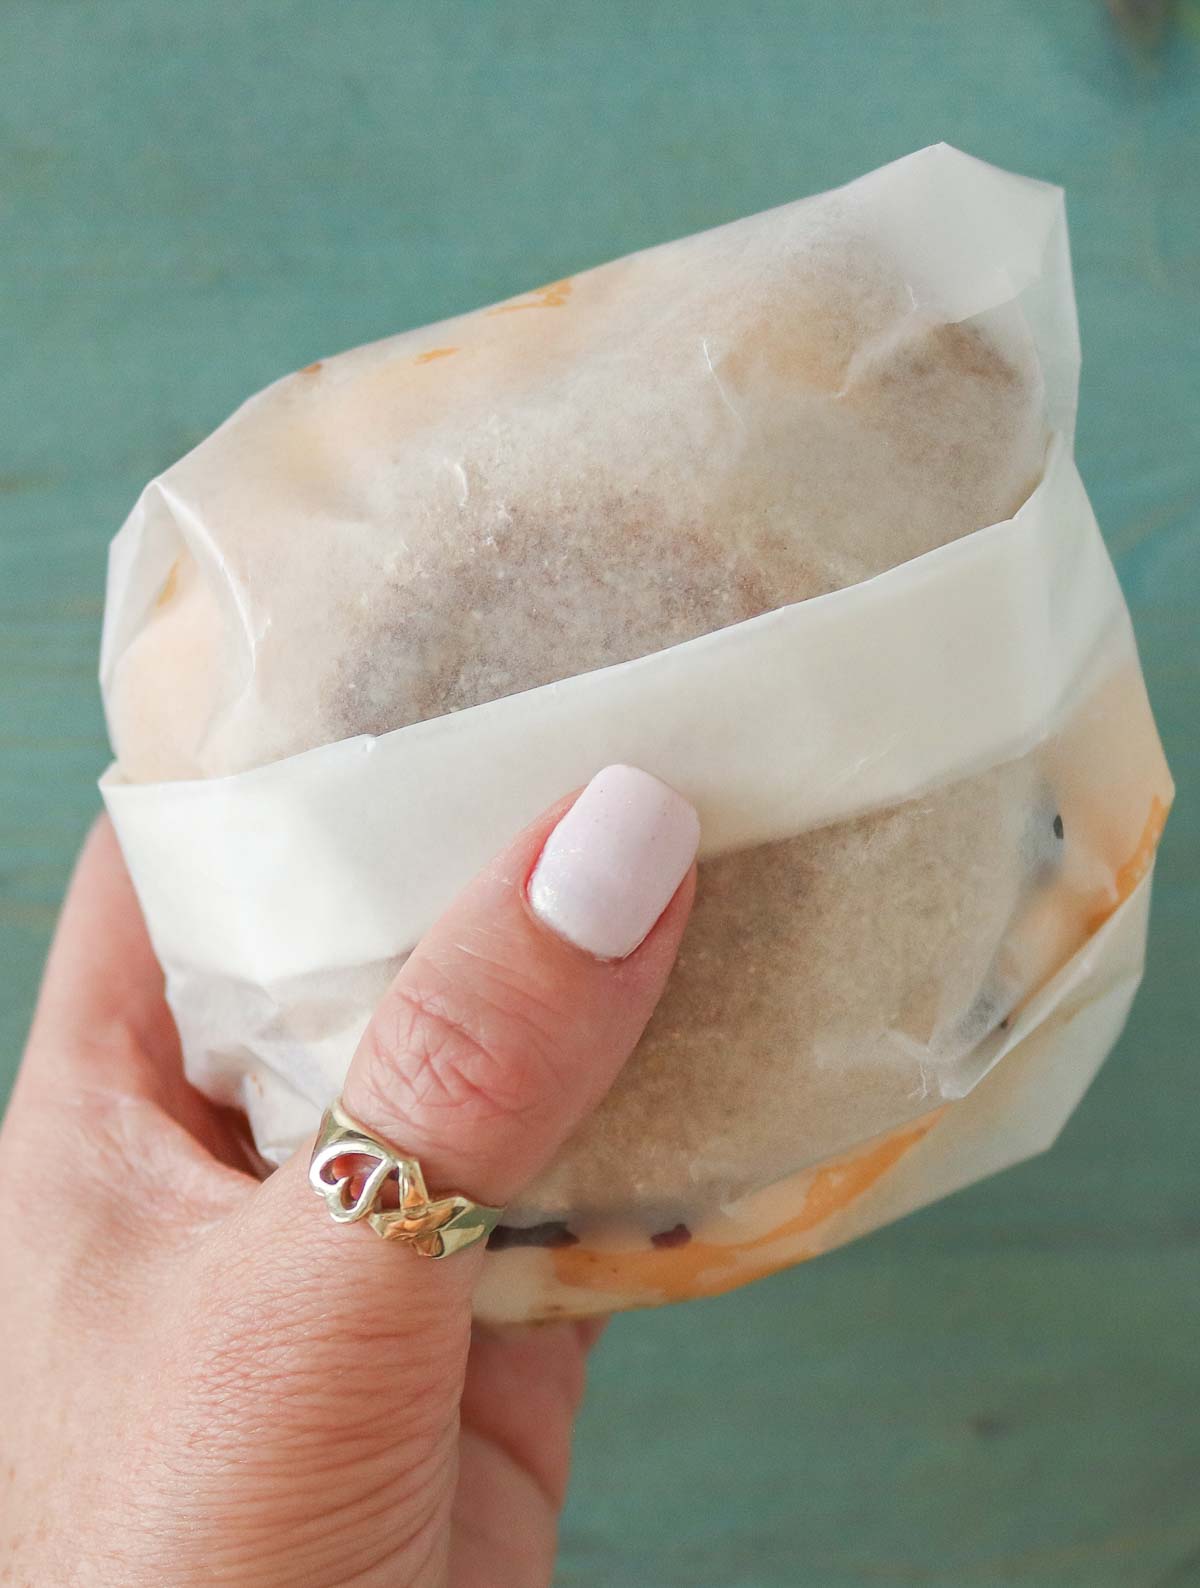 Hand holding a wax paper-wrapped breakfast sandwich.